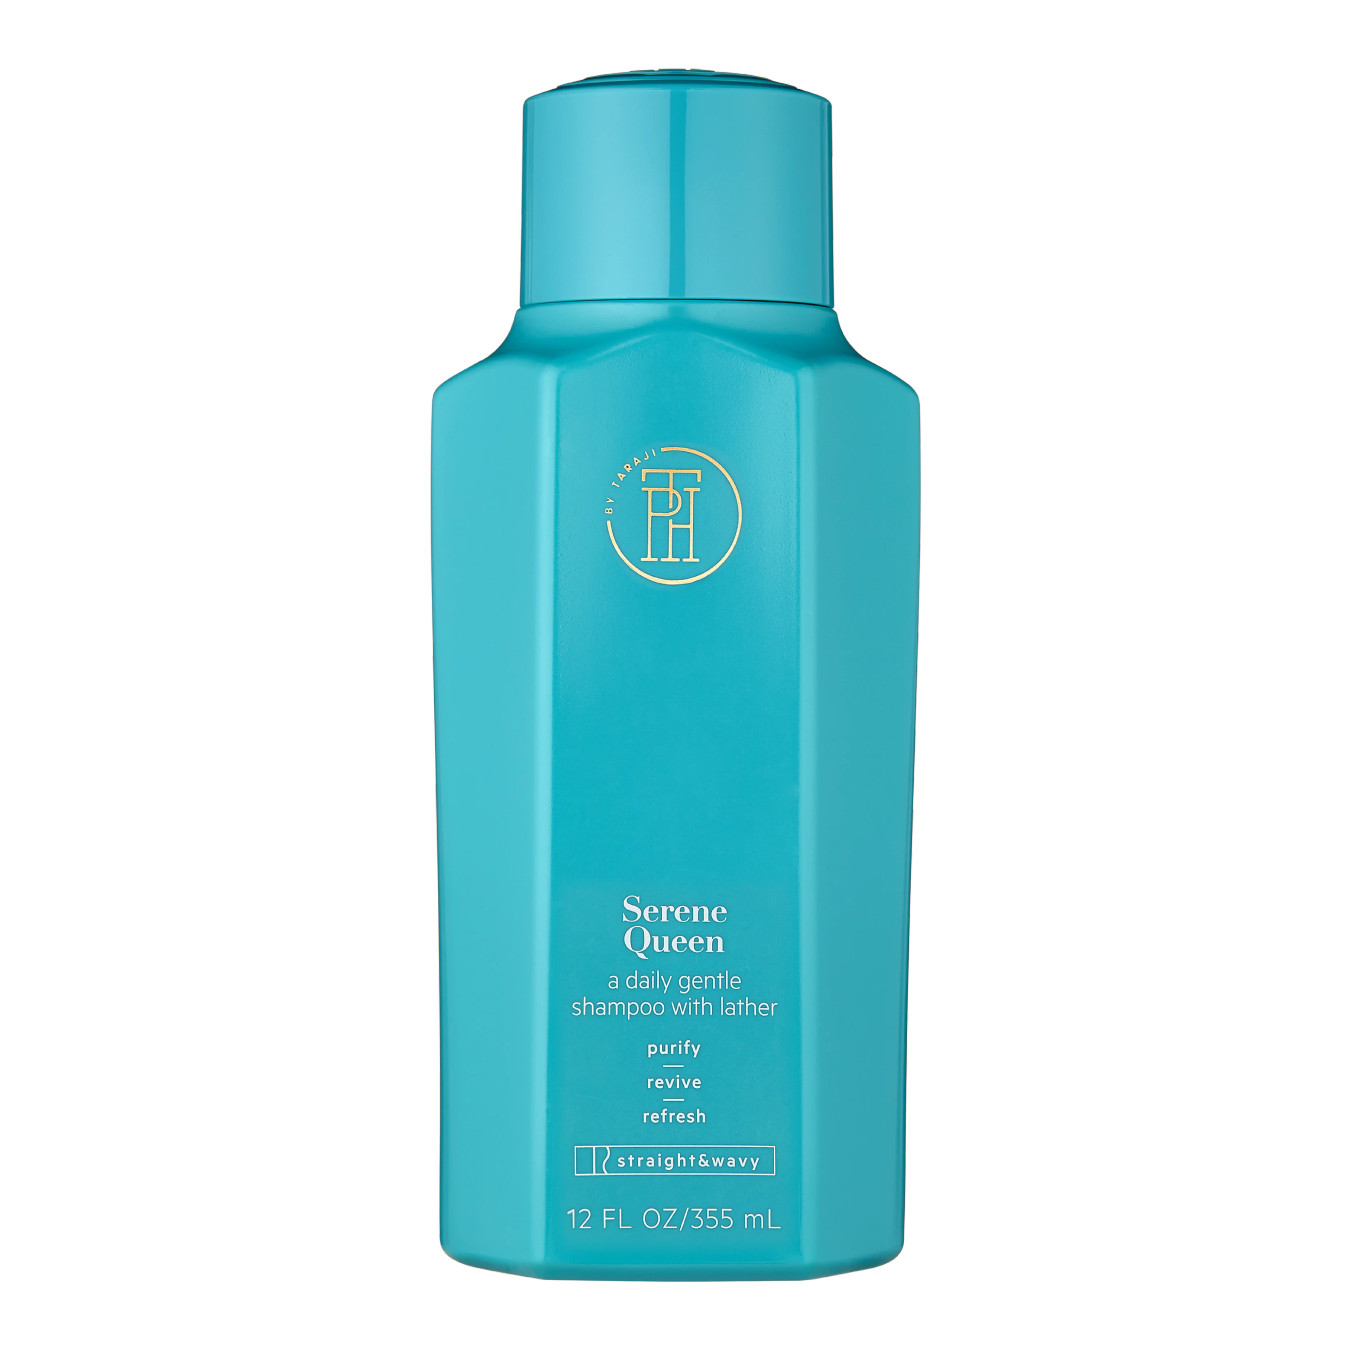 TPH Serene Queen Daily Gentle Shampoo